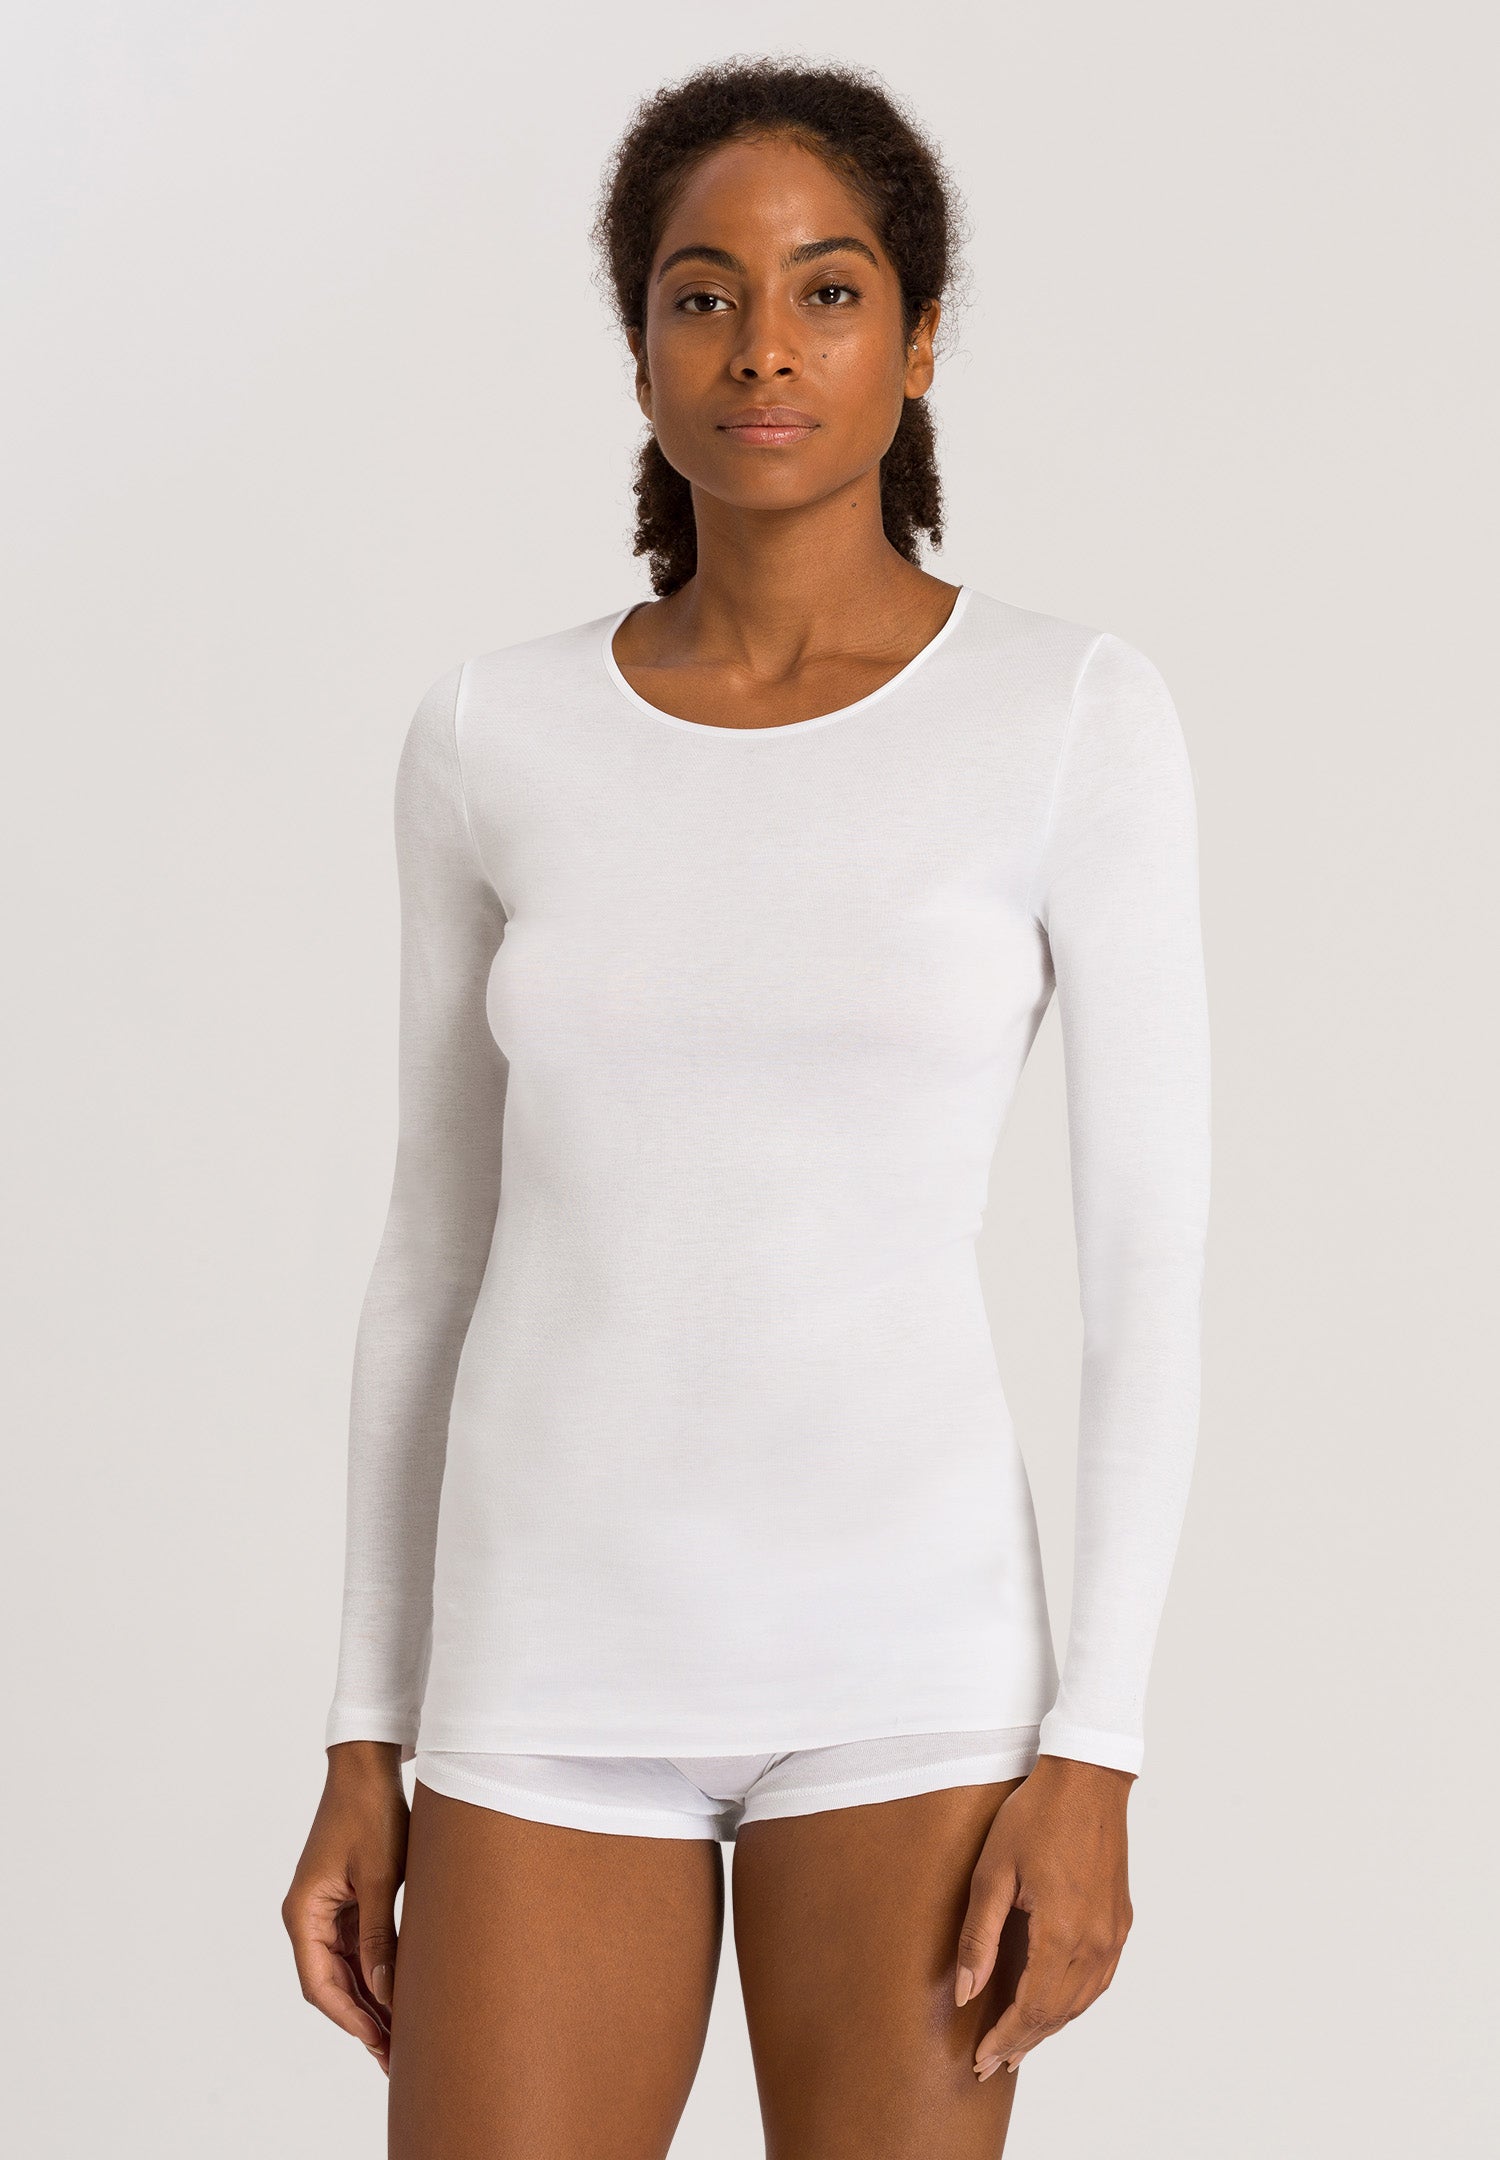 71620 Cotton Seamless L/Slv Shirt - 101 White